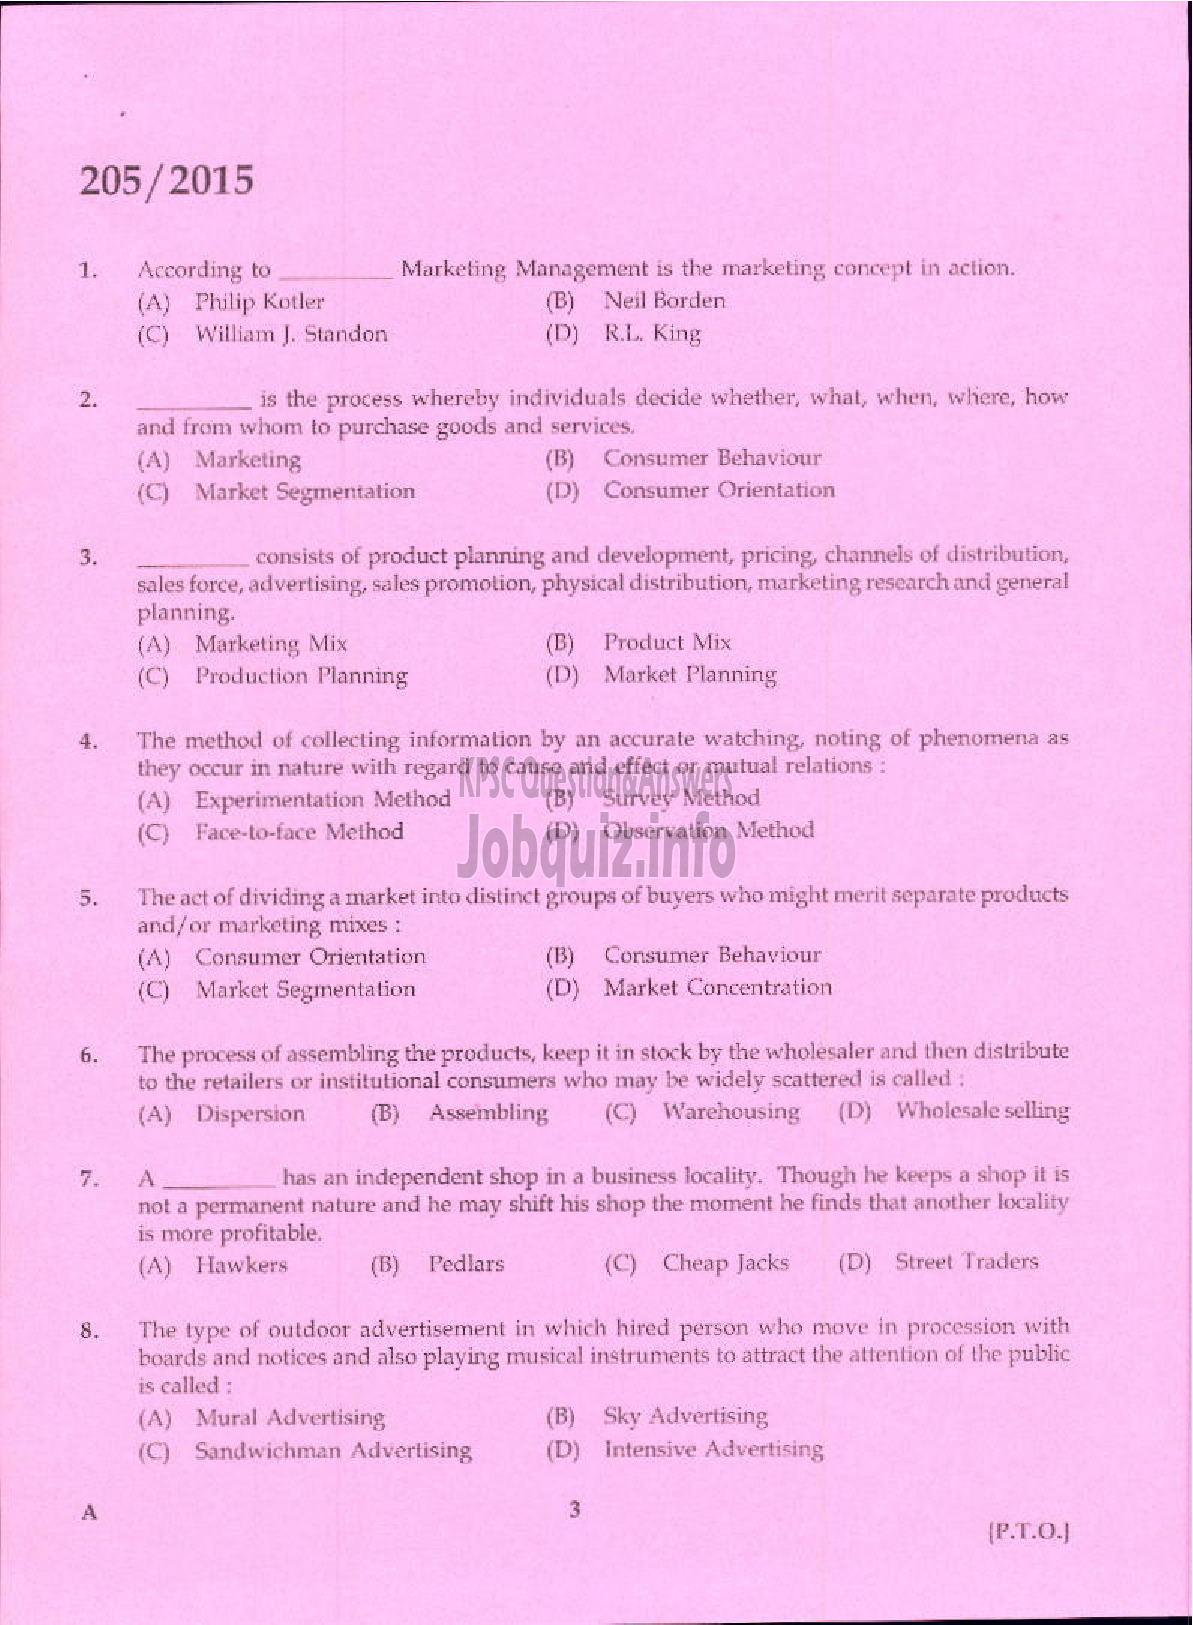 Kerala PSC Question Paper - MARKETING ORGANISER PART I AND PART II KCMMF LTD-1